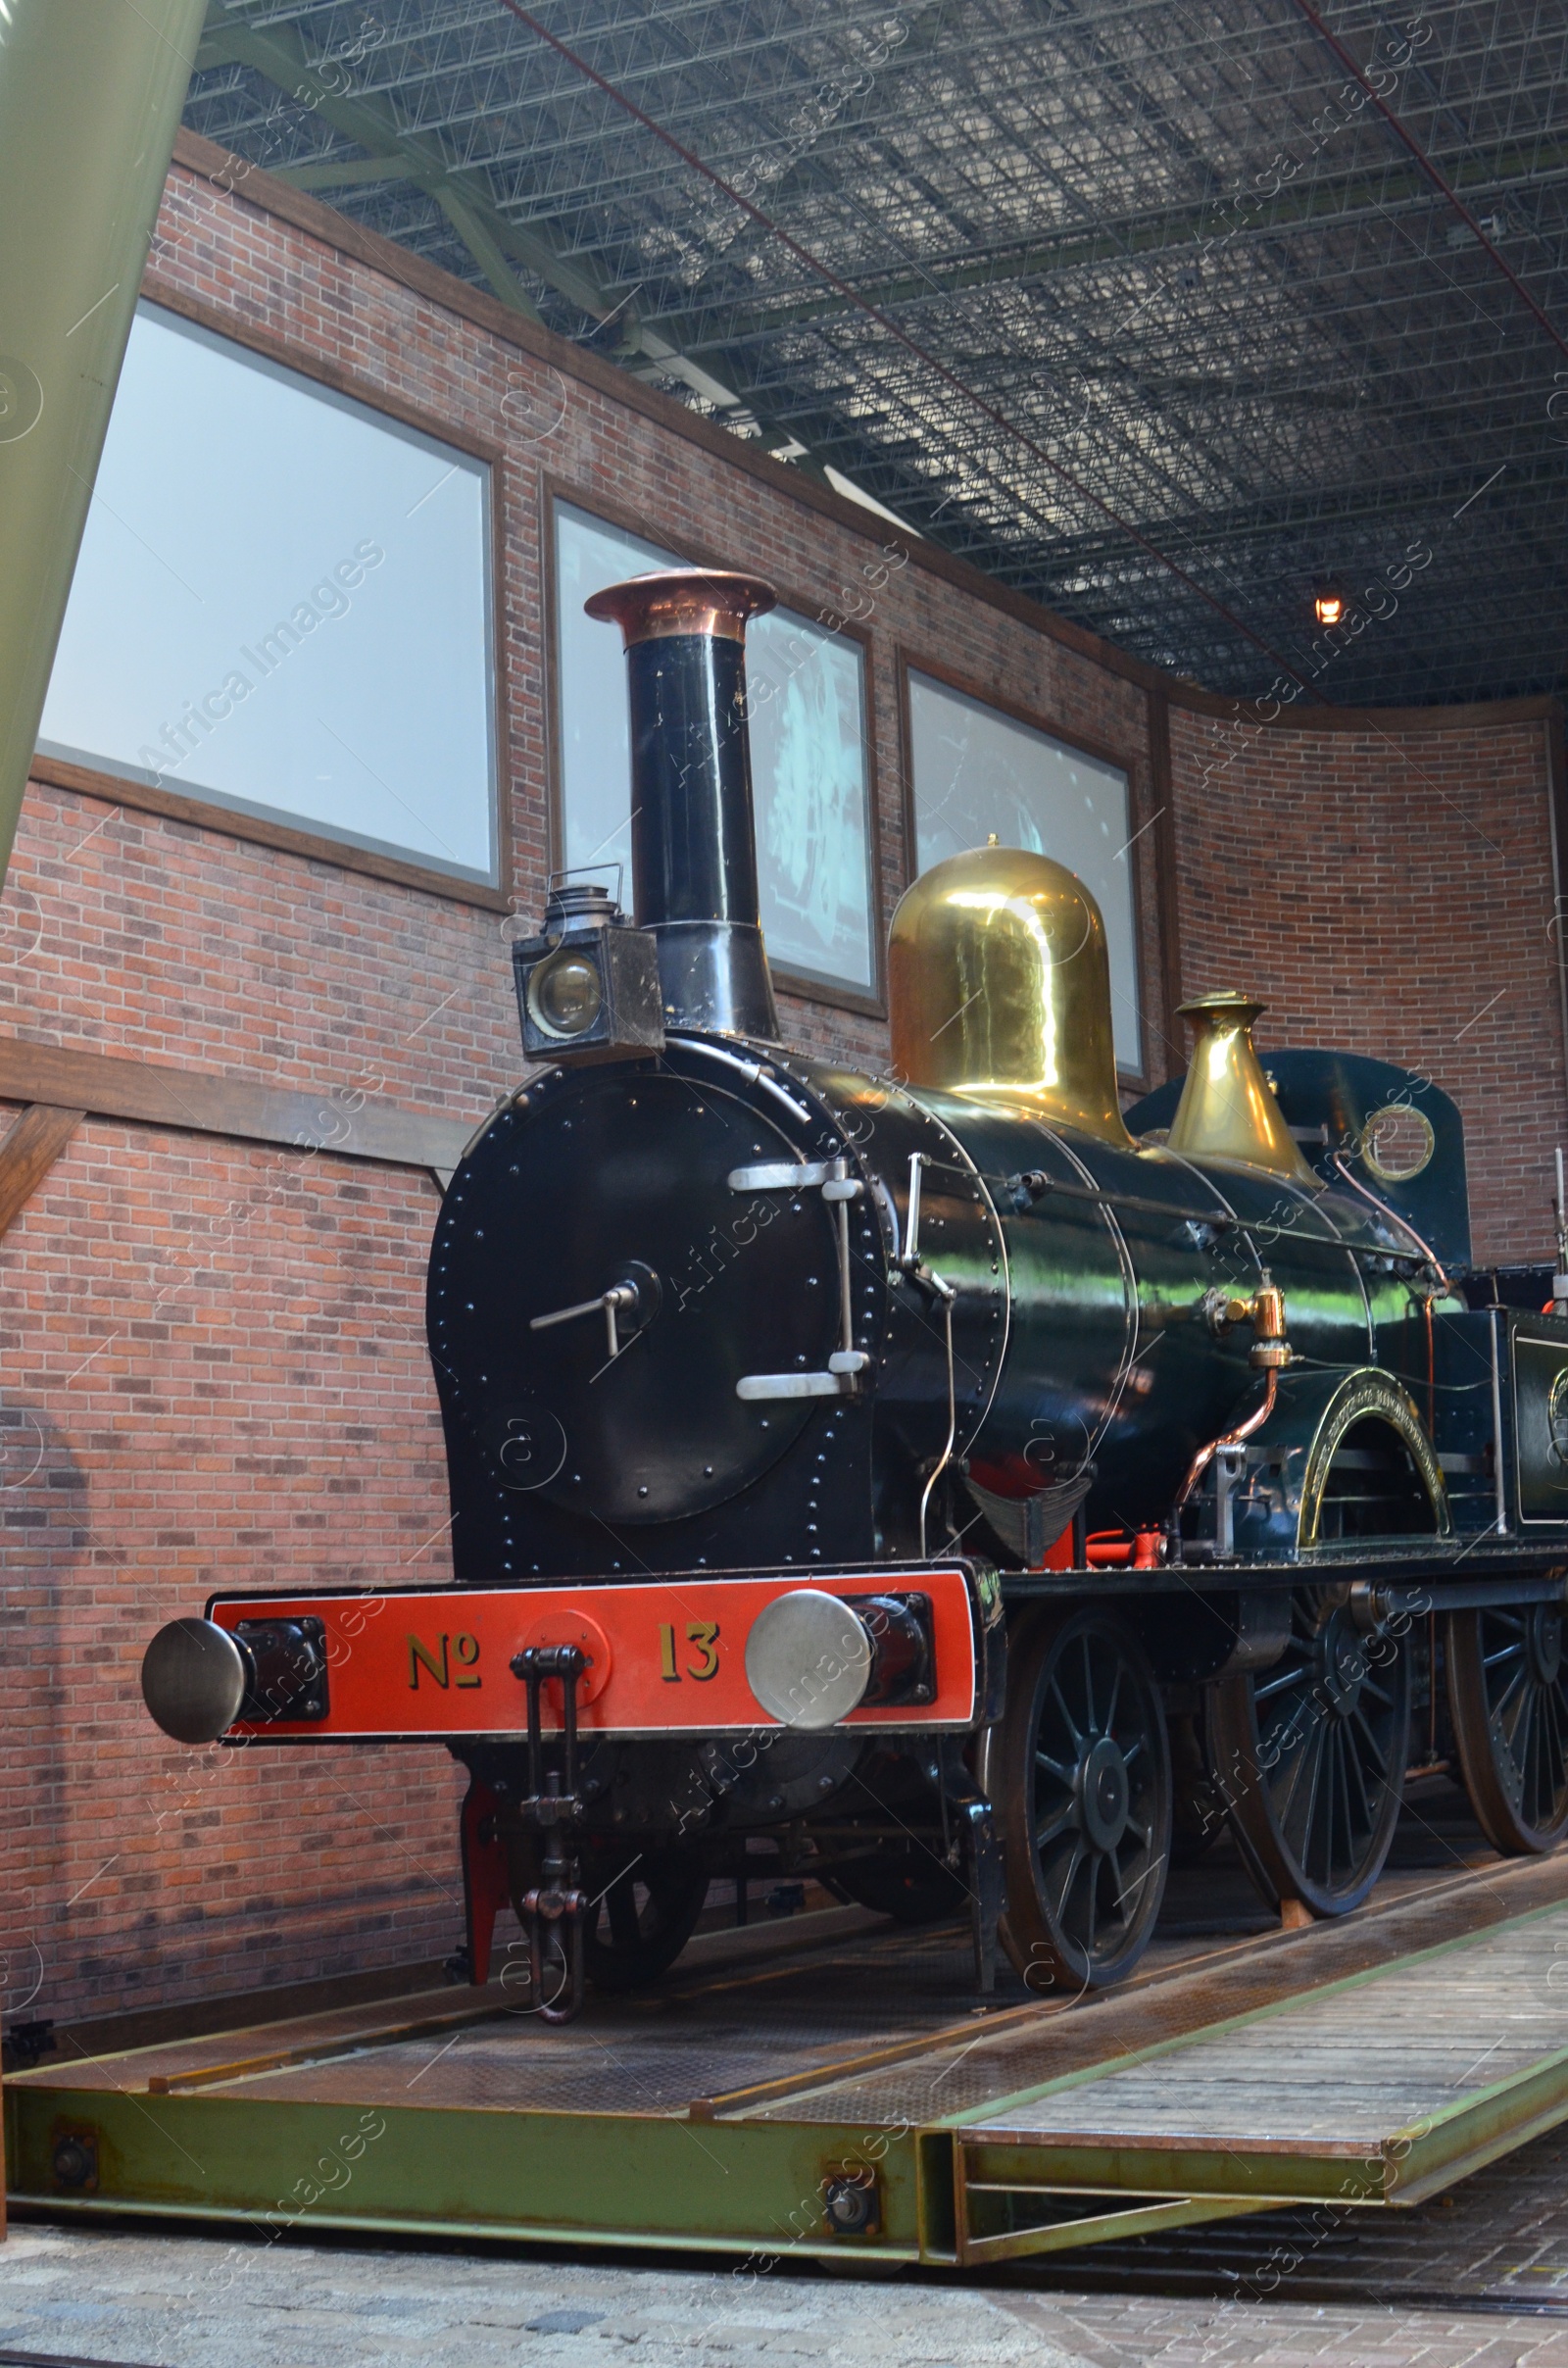 Photo of Utrecht, Netherlands - July 23, 2022: Historical steam train on display in Spoorwegmuseum